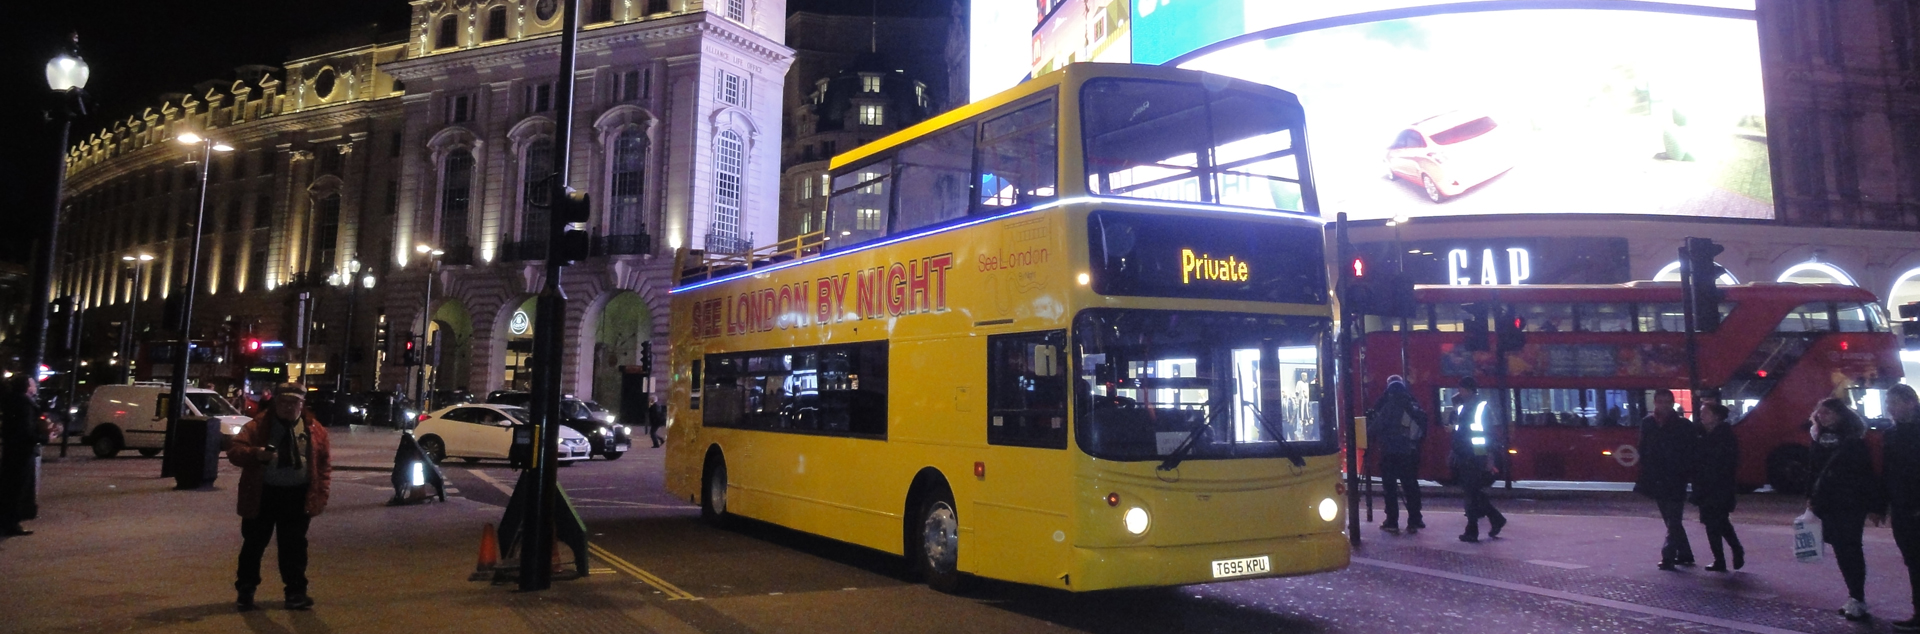 london night tour big bus